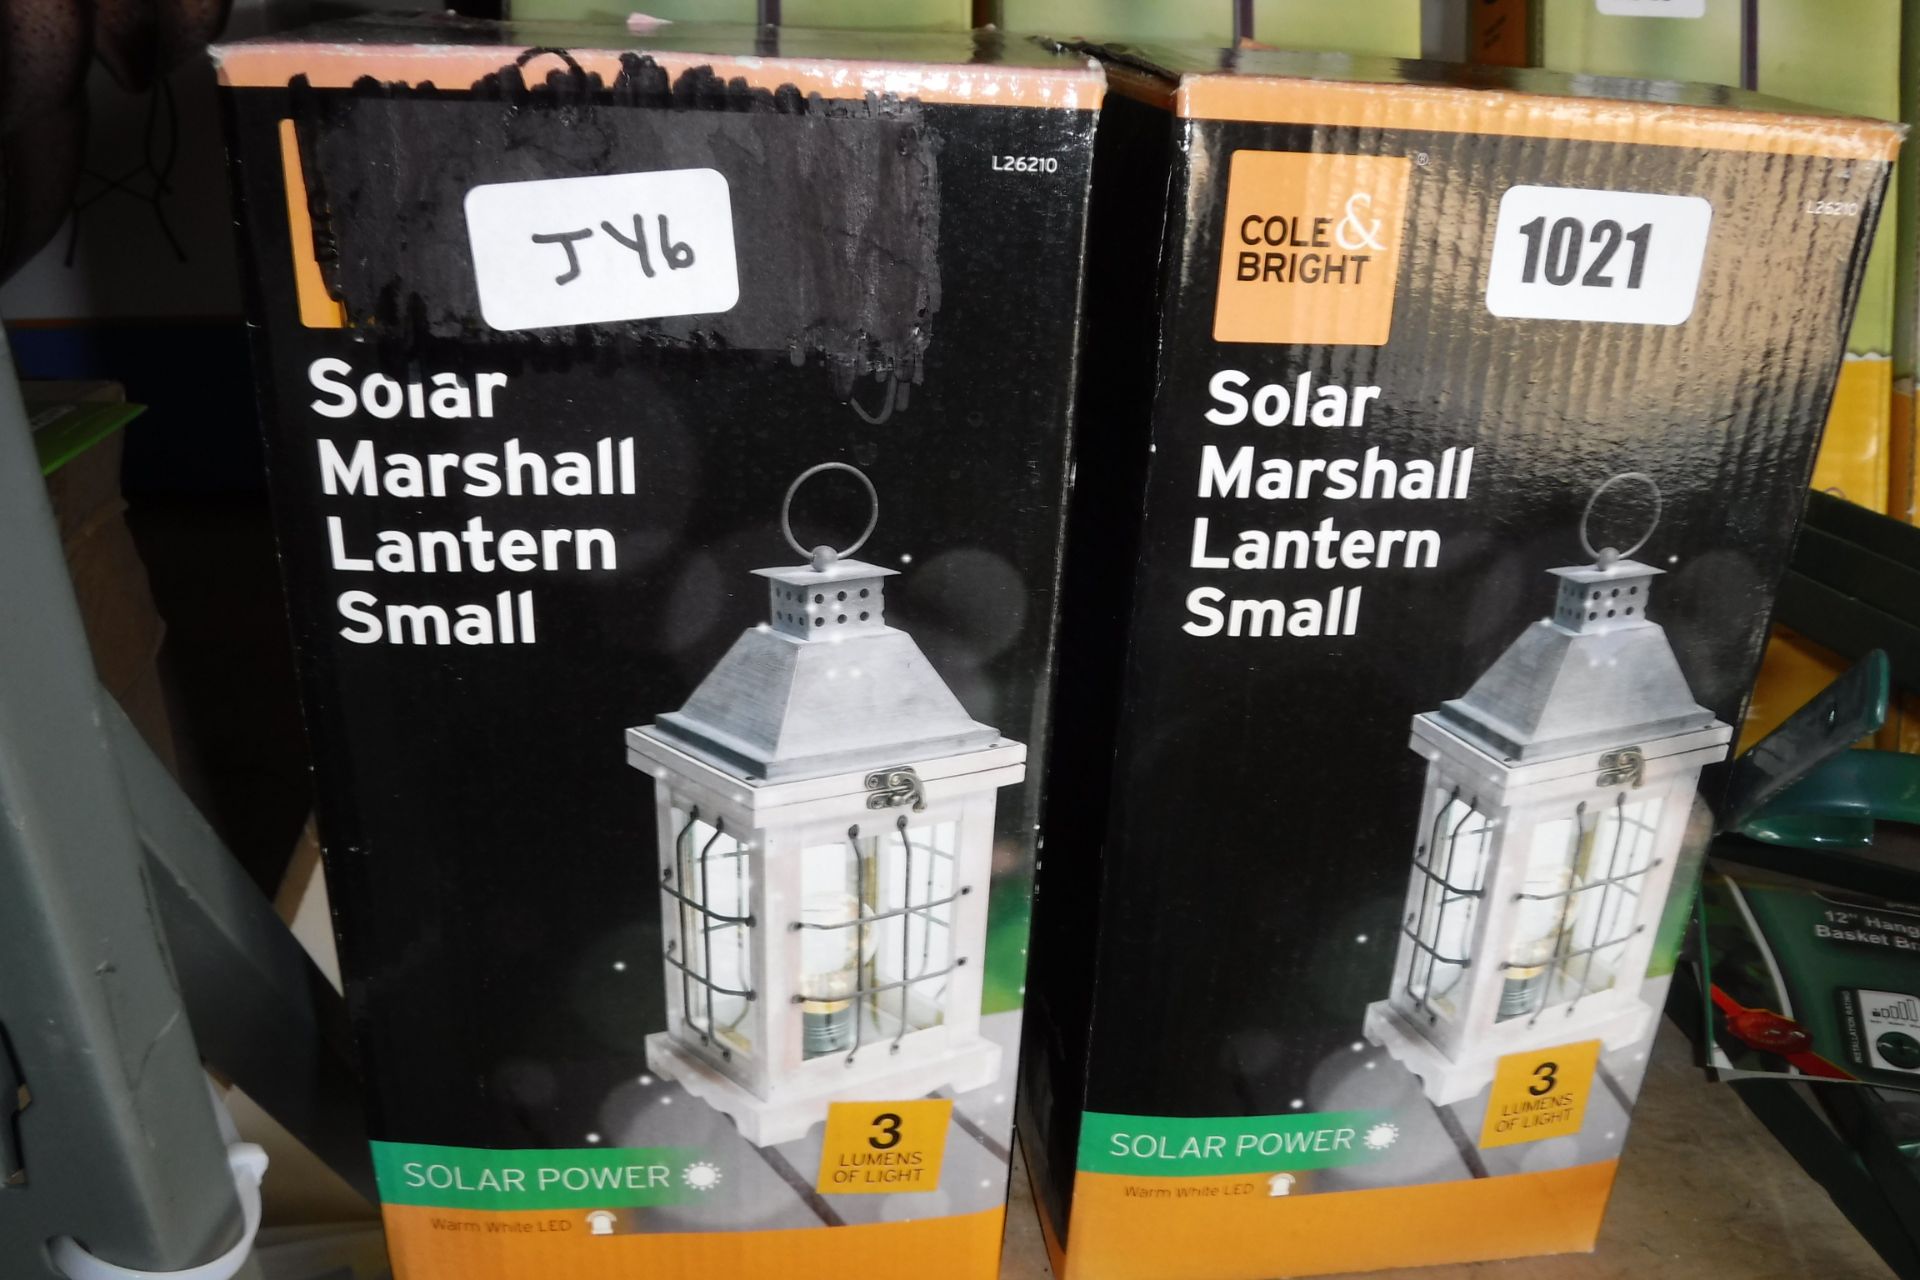 2 solar Marshall lanterns, size S